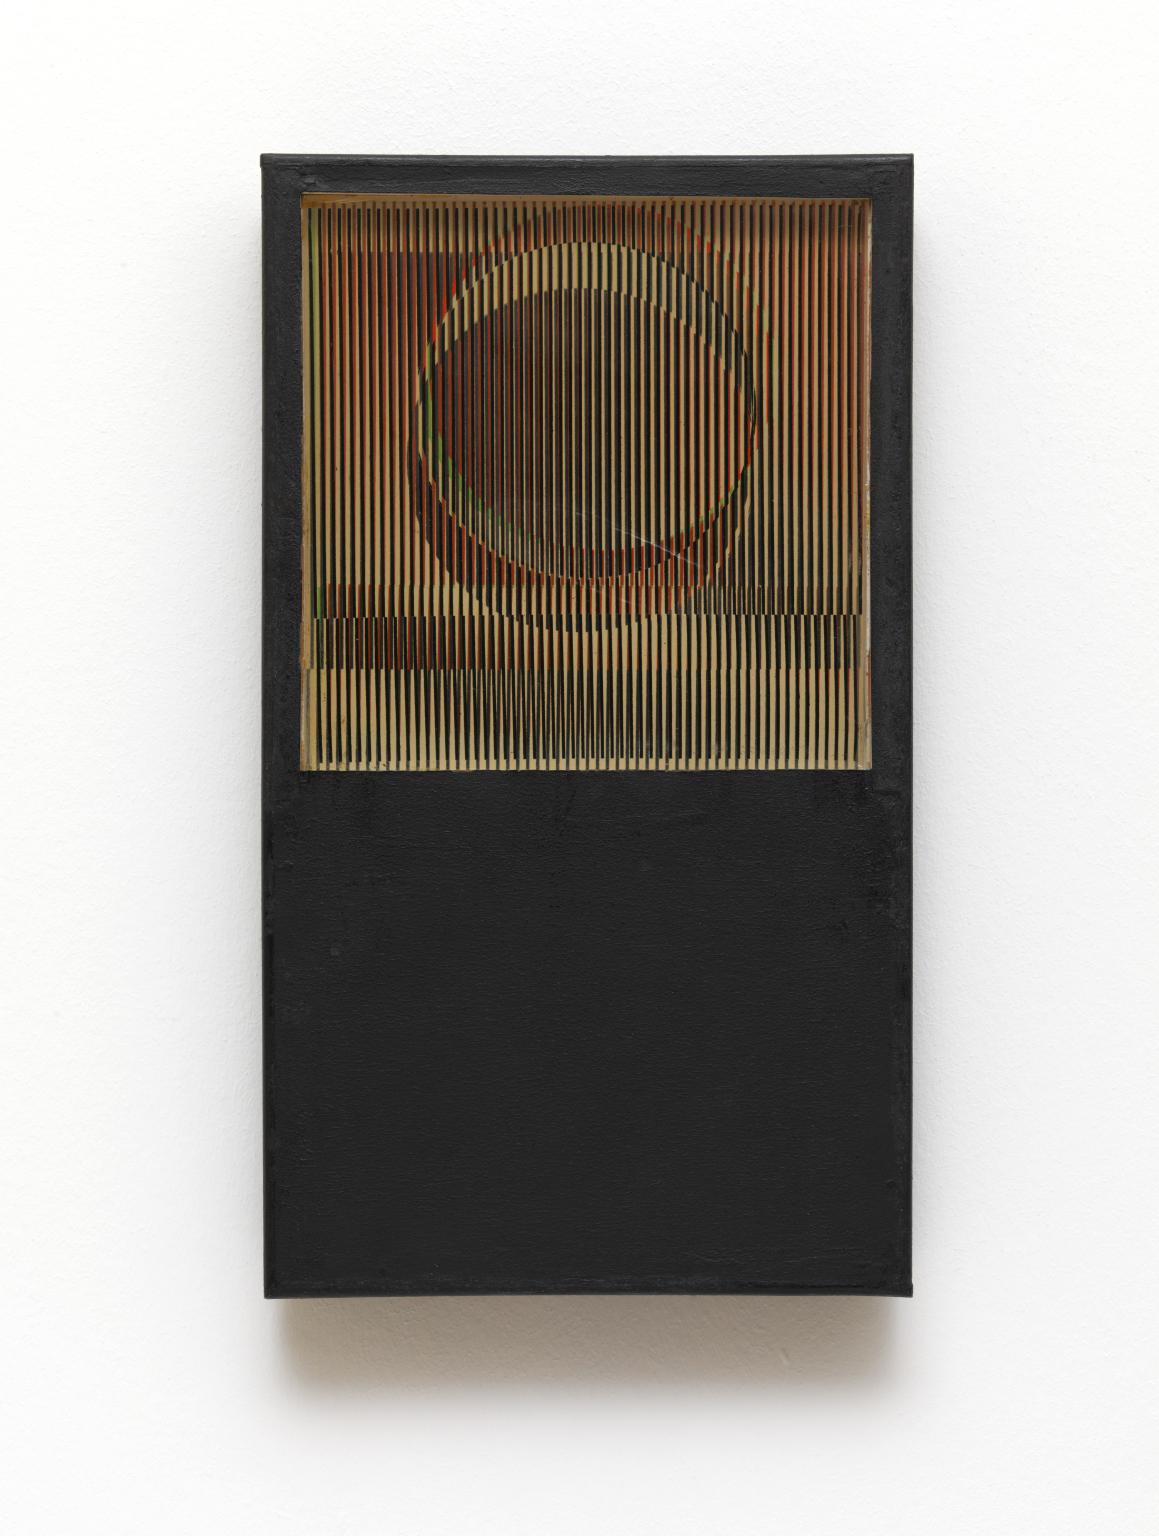 Carlos Cruz-Diez, Physichromie No. 123, 1964, Tate Modern, London.